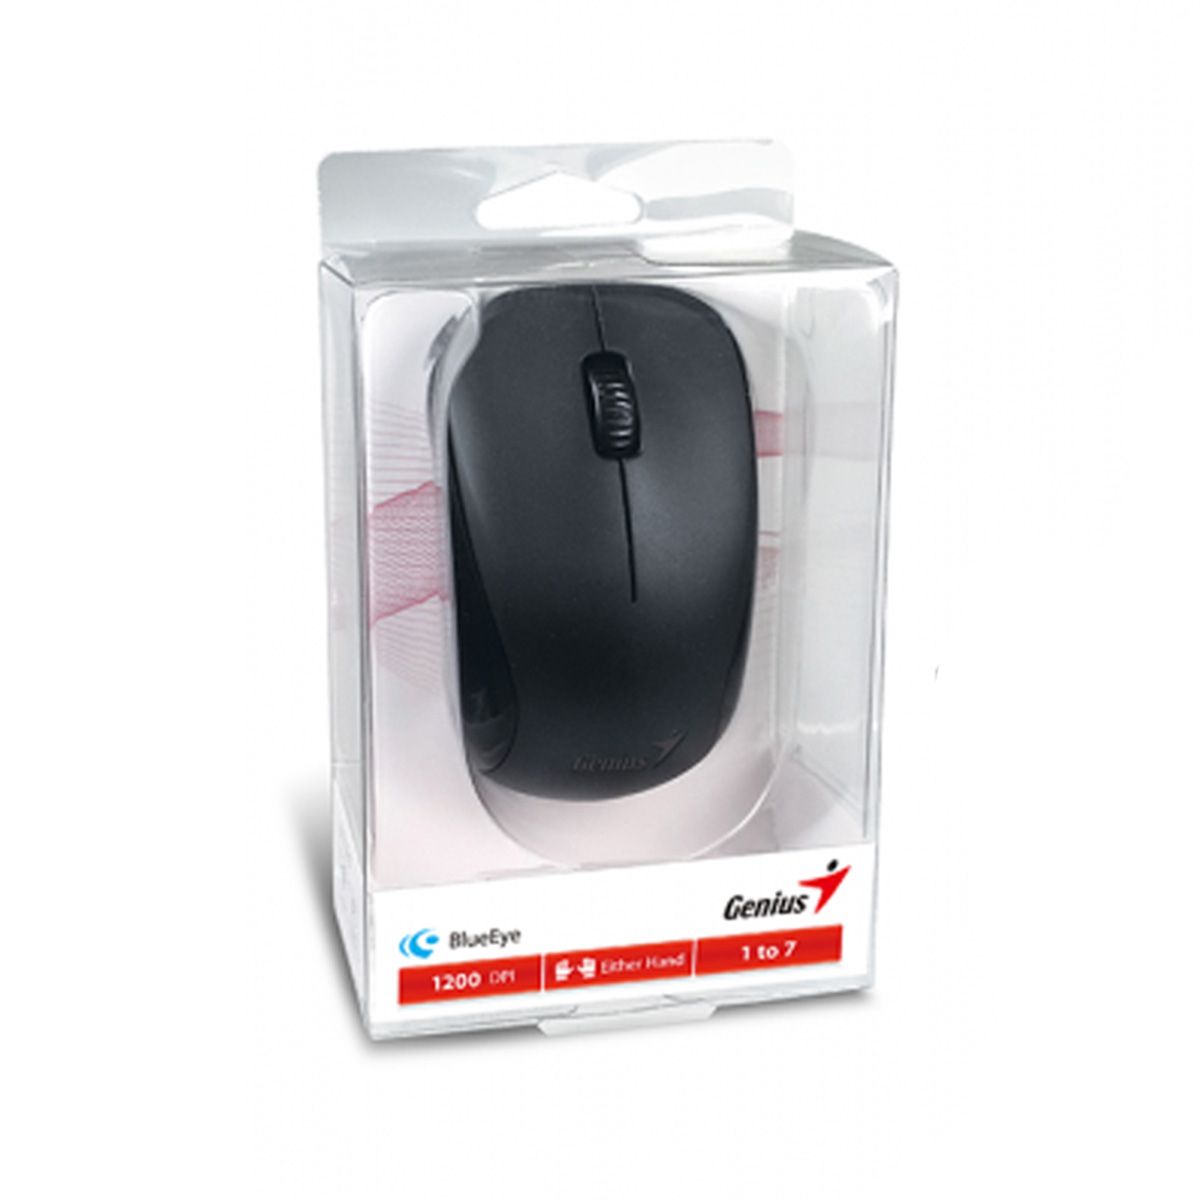 GENIUS เม้าส์ไร้สาย Wireless Mouse BlueEye NX-7000 (Black)